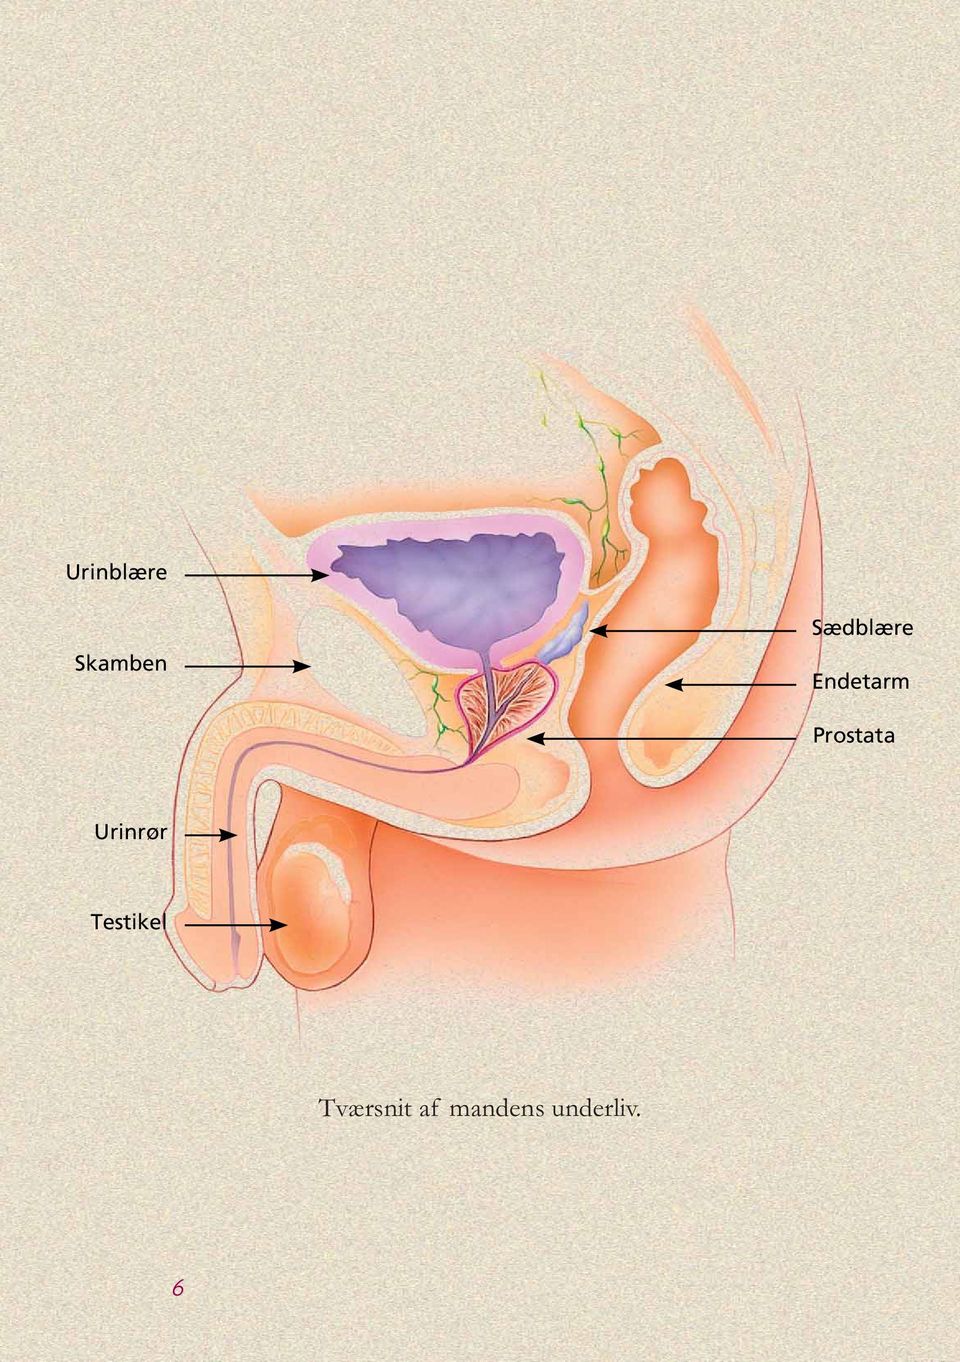 Prostata Urinrør